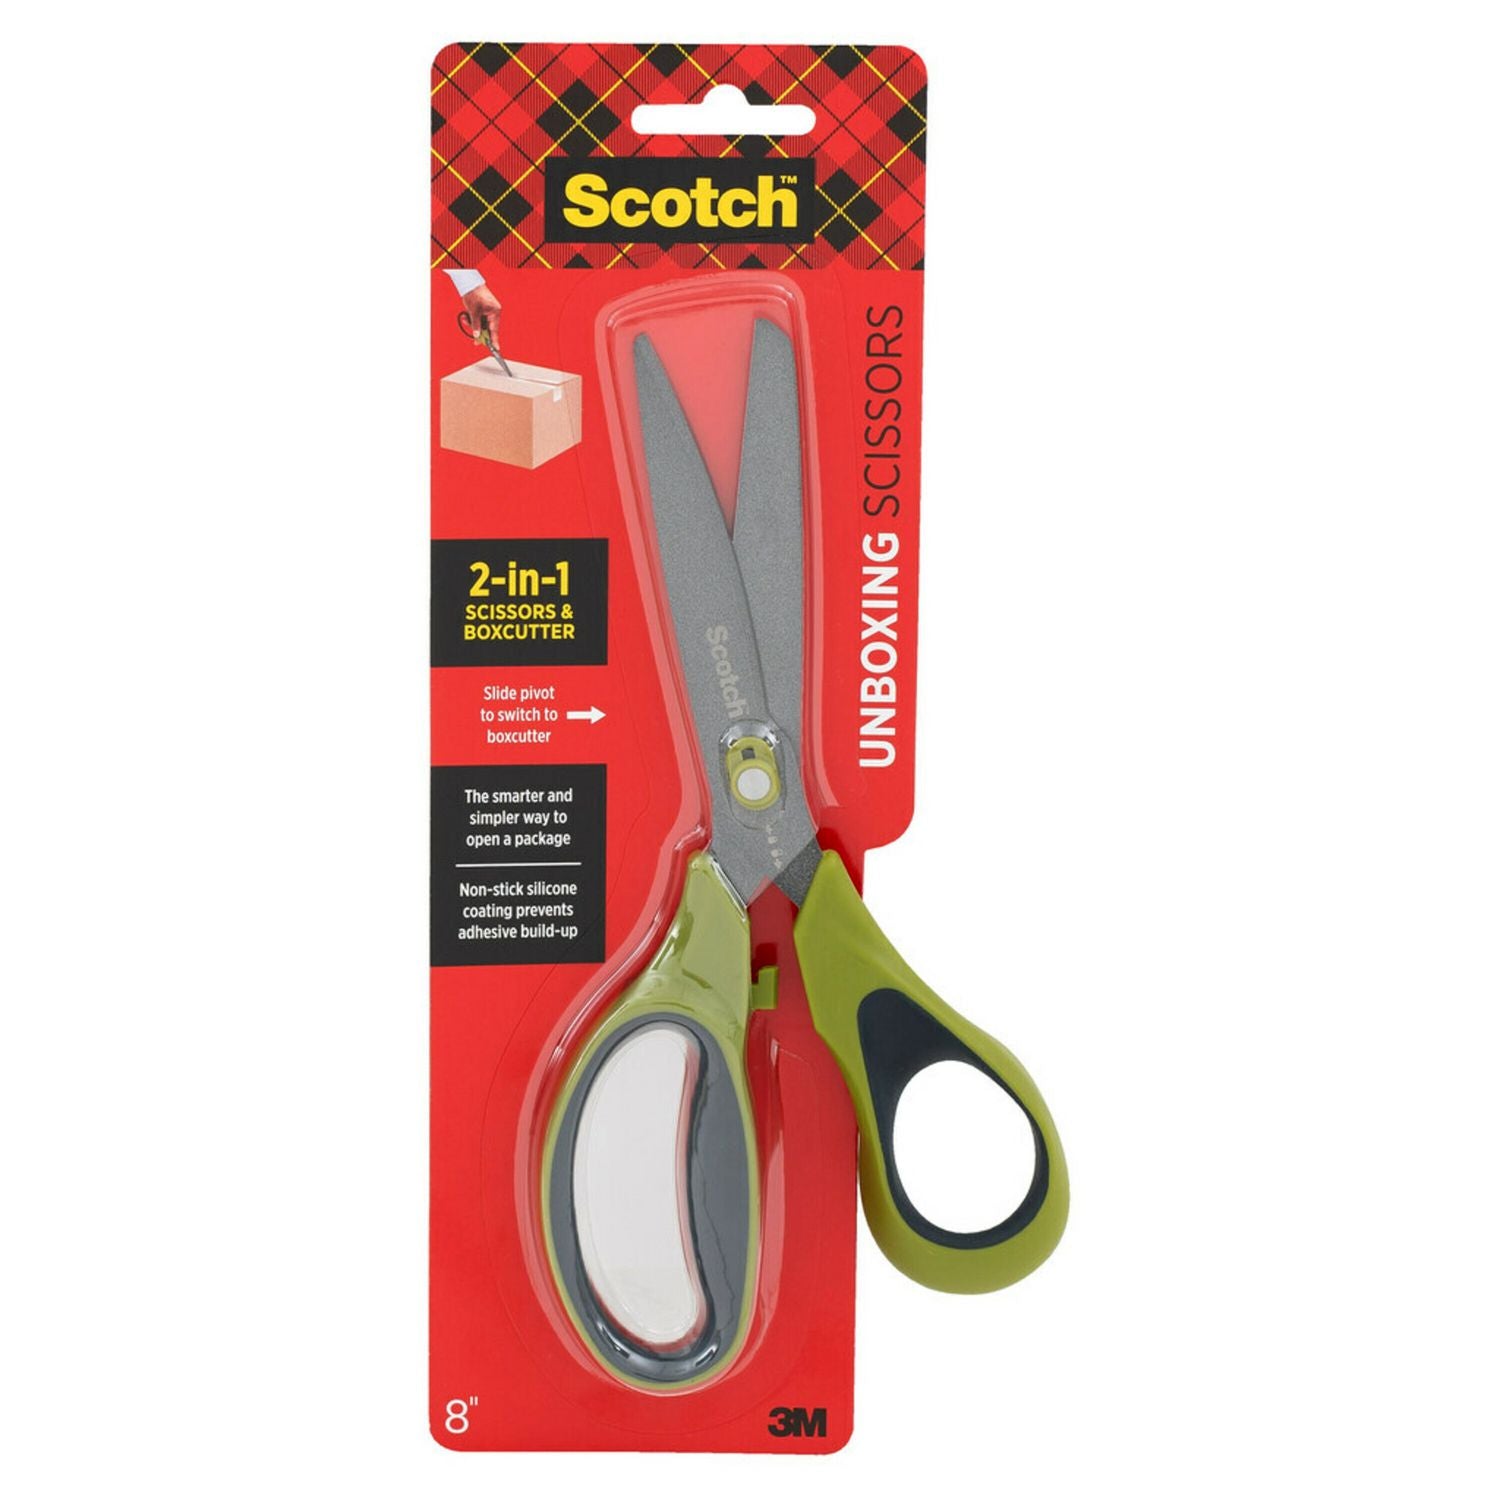 Scotch™ Scotch Non-Stick Unboxing Scissors, 8"" Long, 2.7"" Cut Length, Green/Black Handle